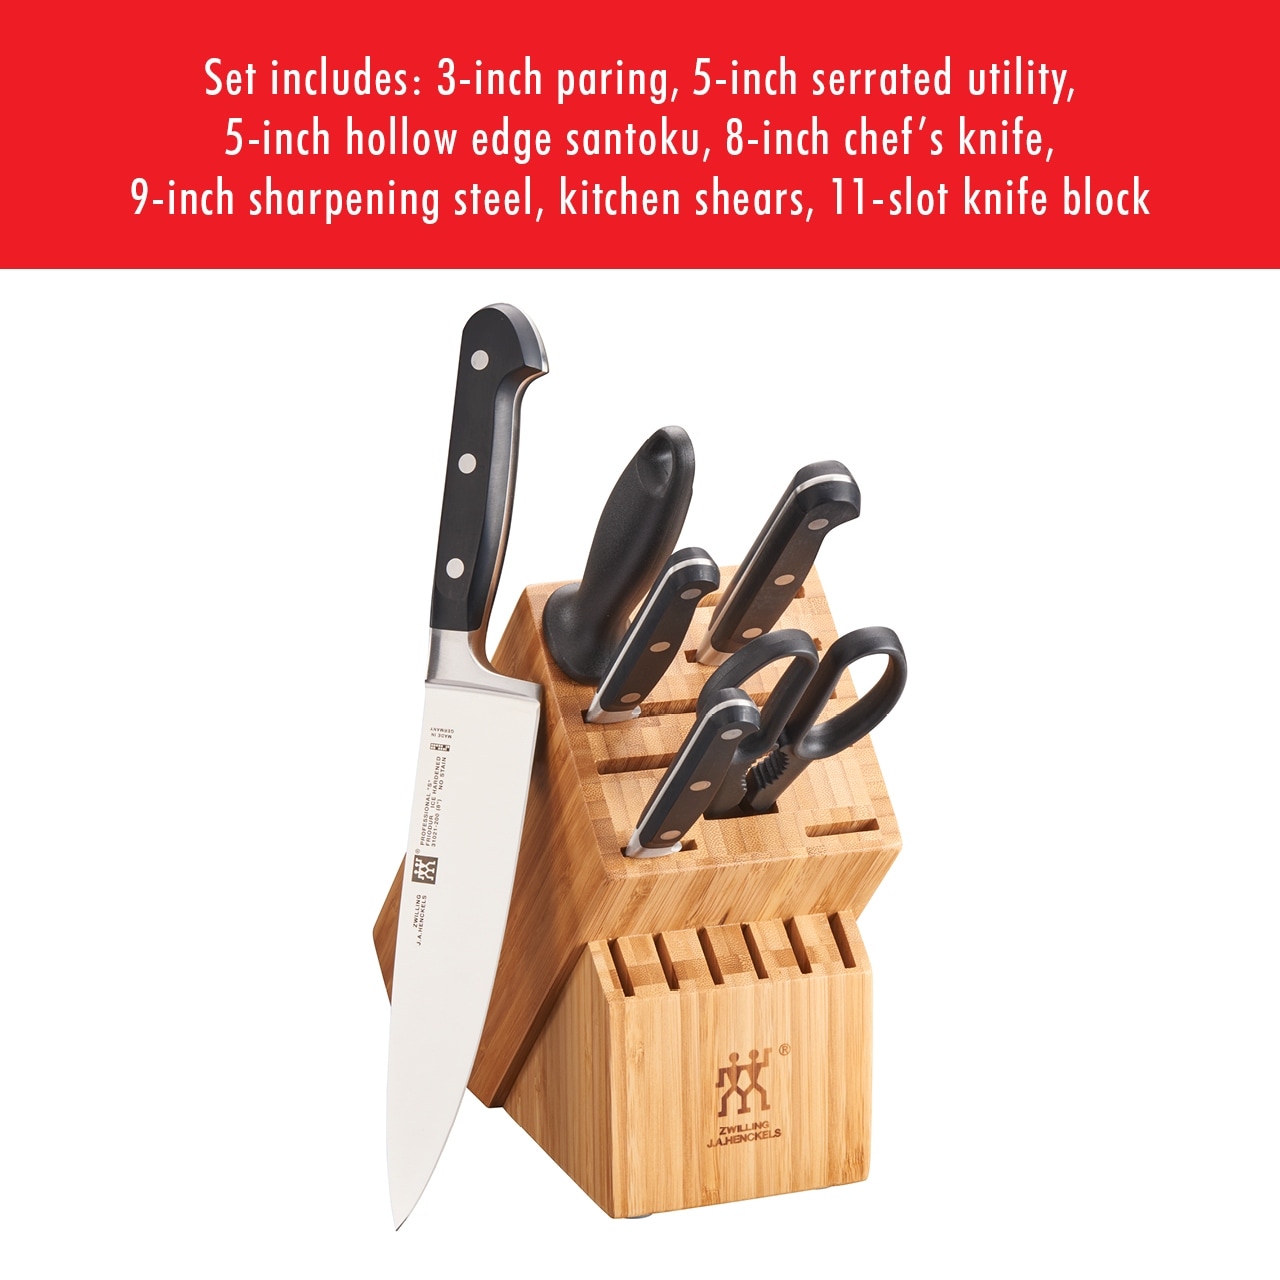 HENCKELS Modernist 20-pc Self-Sharpening Knife Set with Block, Chef Knife,  Paring Knife, Utility Knife, Bread Knife, Steak Knife, Black, Stainless